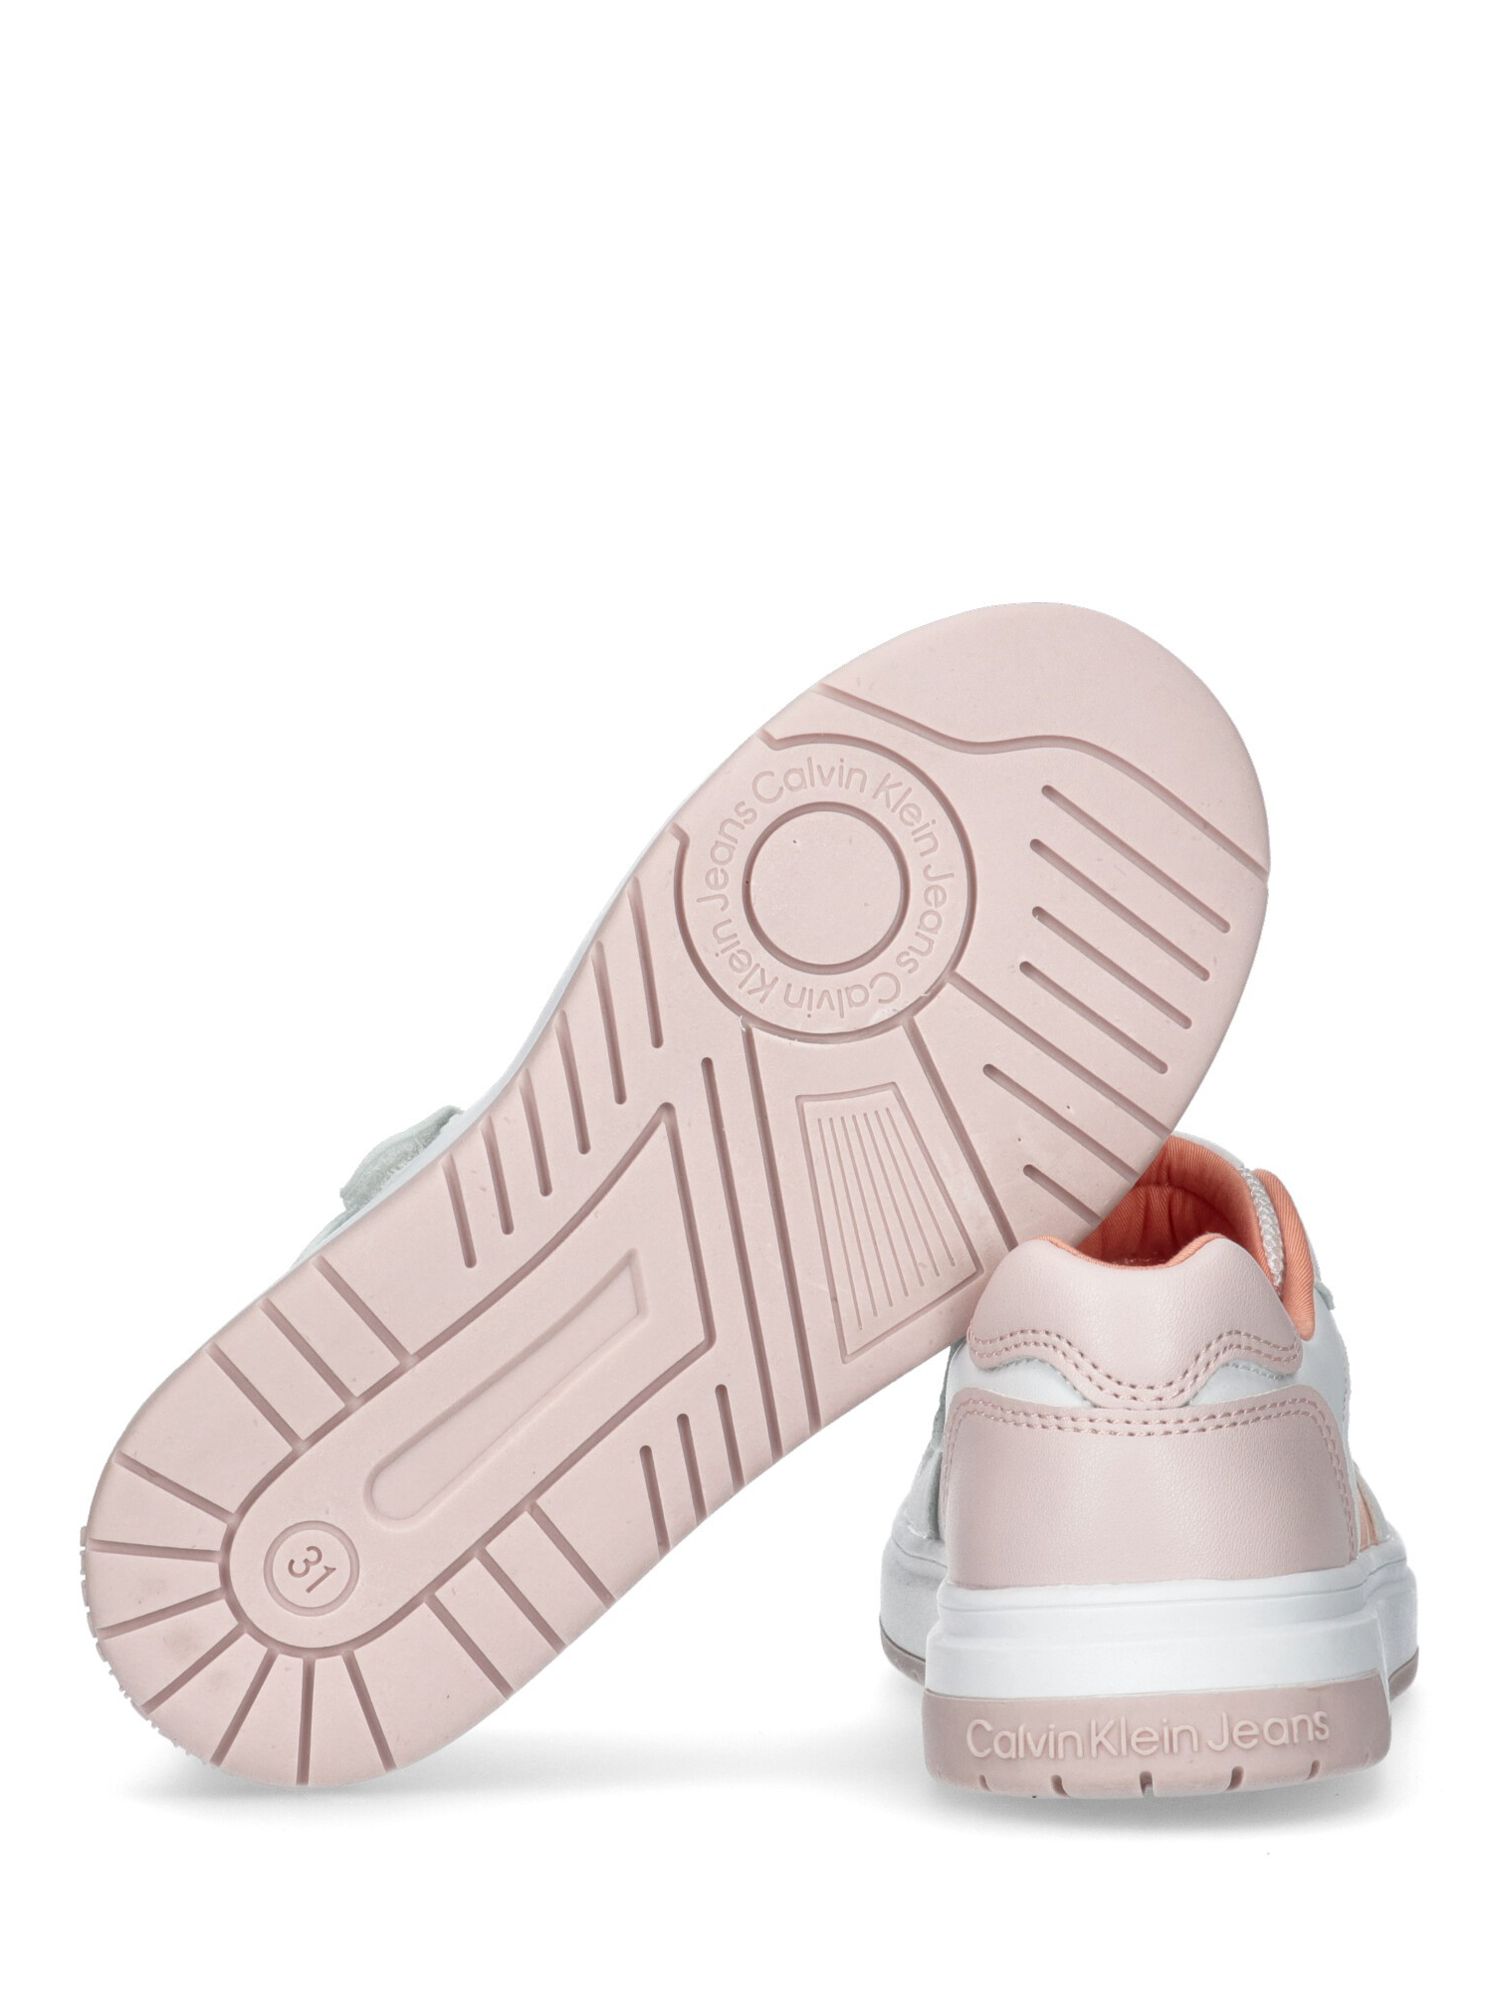 Calvin Klein Kids' Monogram Logo Low Cut Lace Up Trainers, White/Pink, 11.5 Jnr